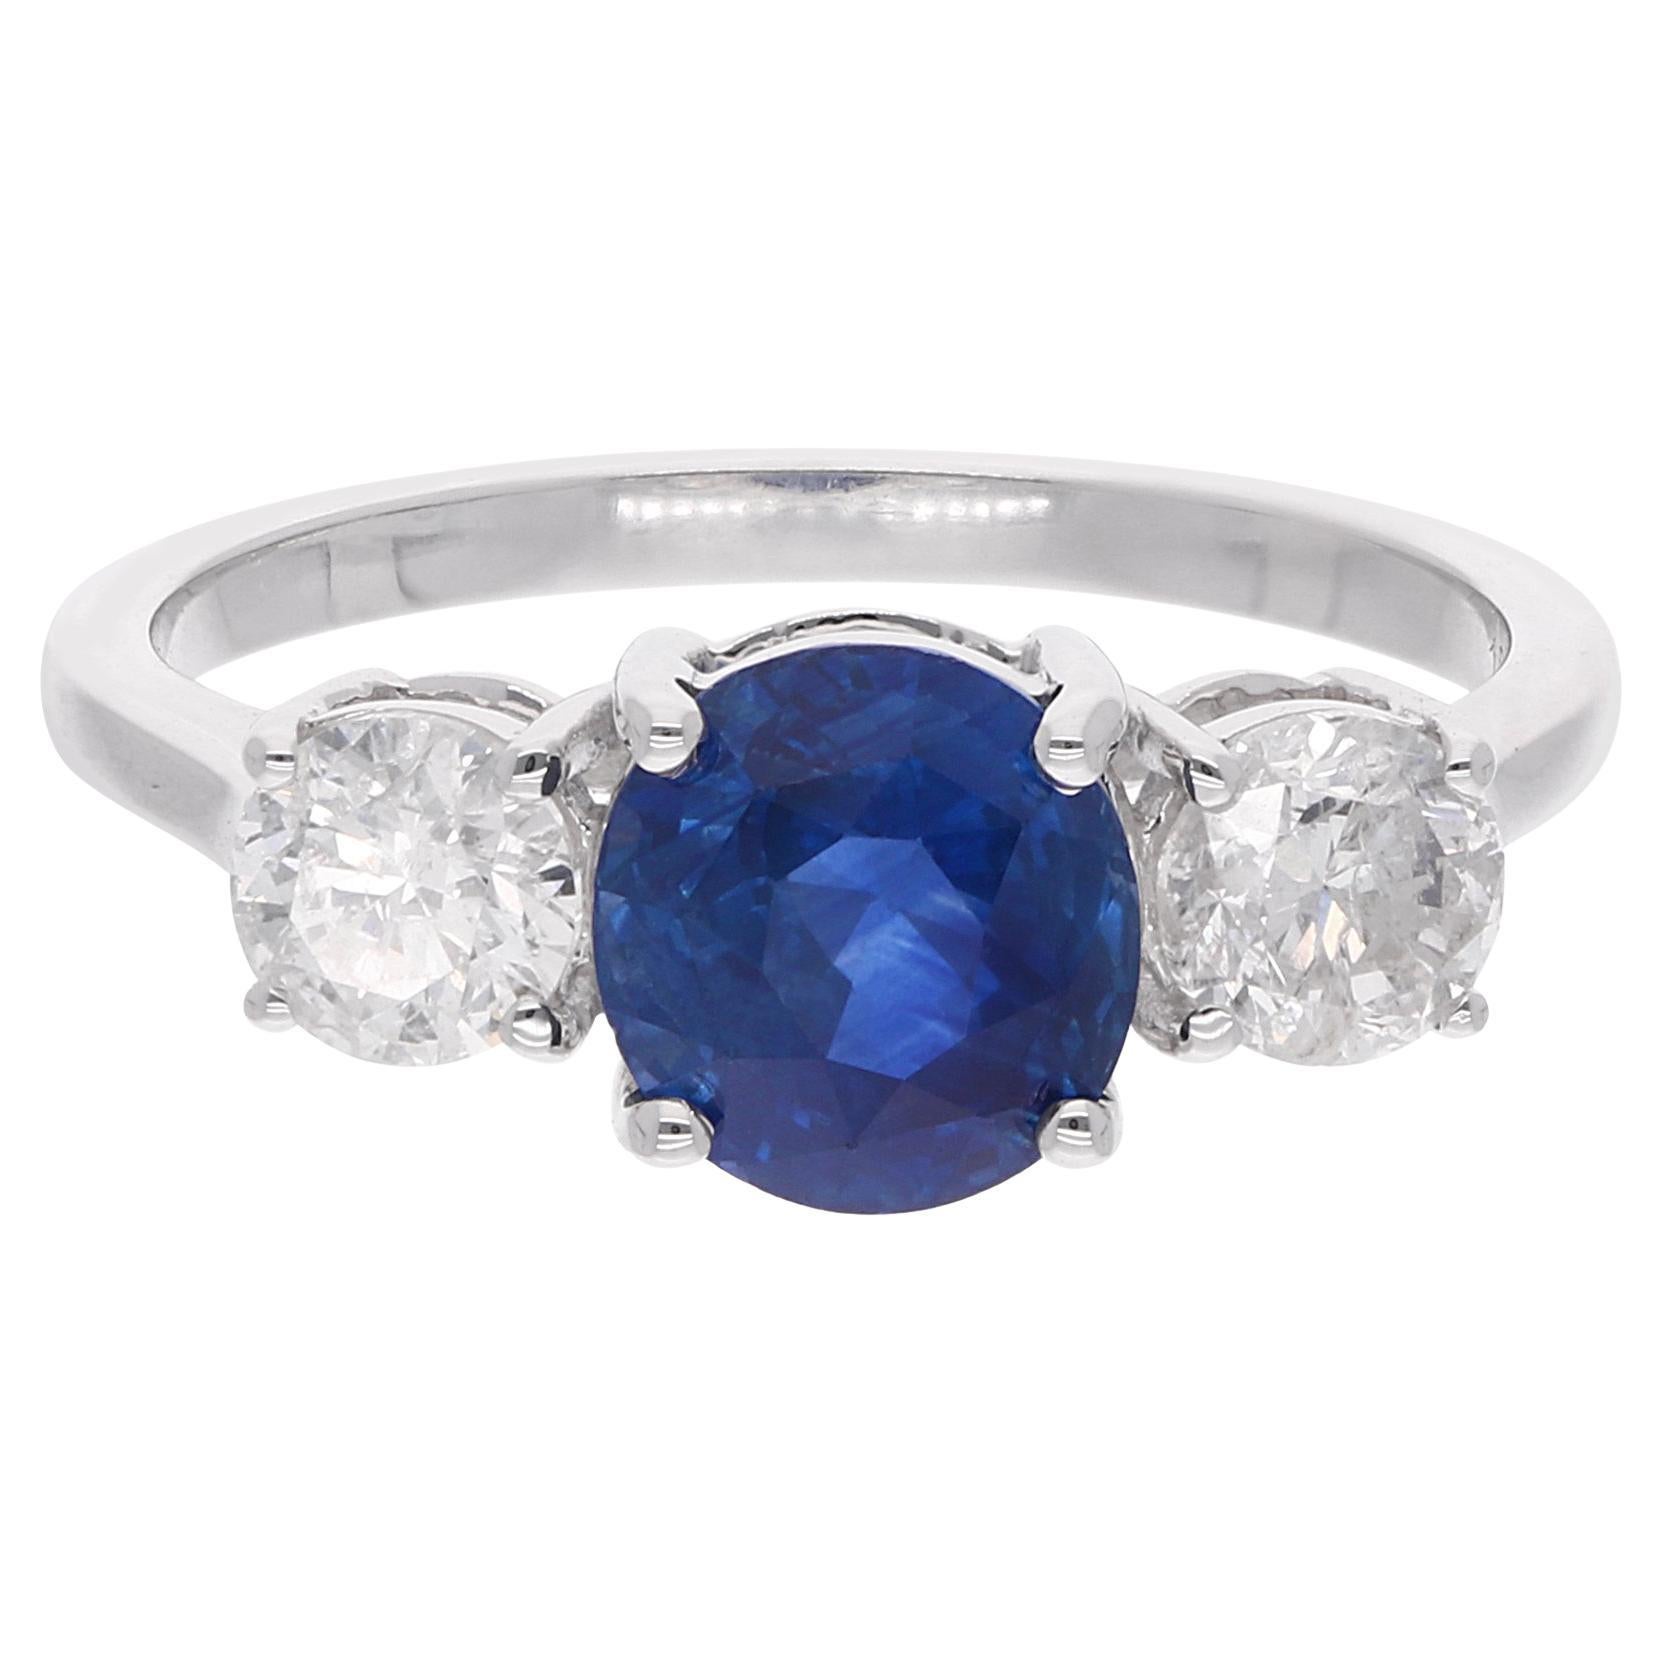 For Sale:  Blue Sapphire Gemstone Ring Diamond 18 Karat White Gold Handmade Fine Jewelry